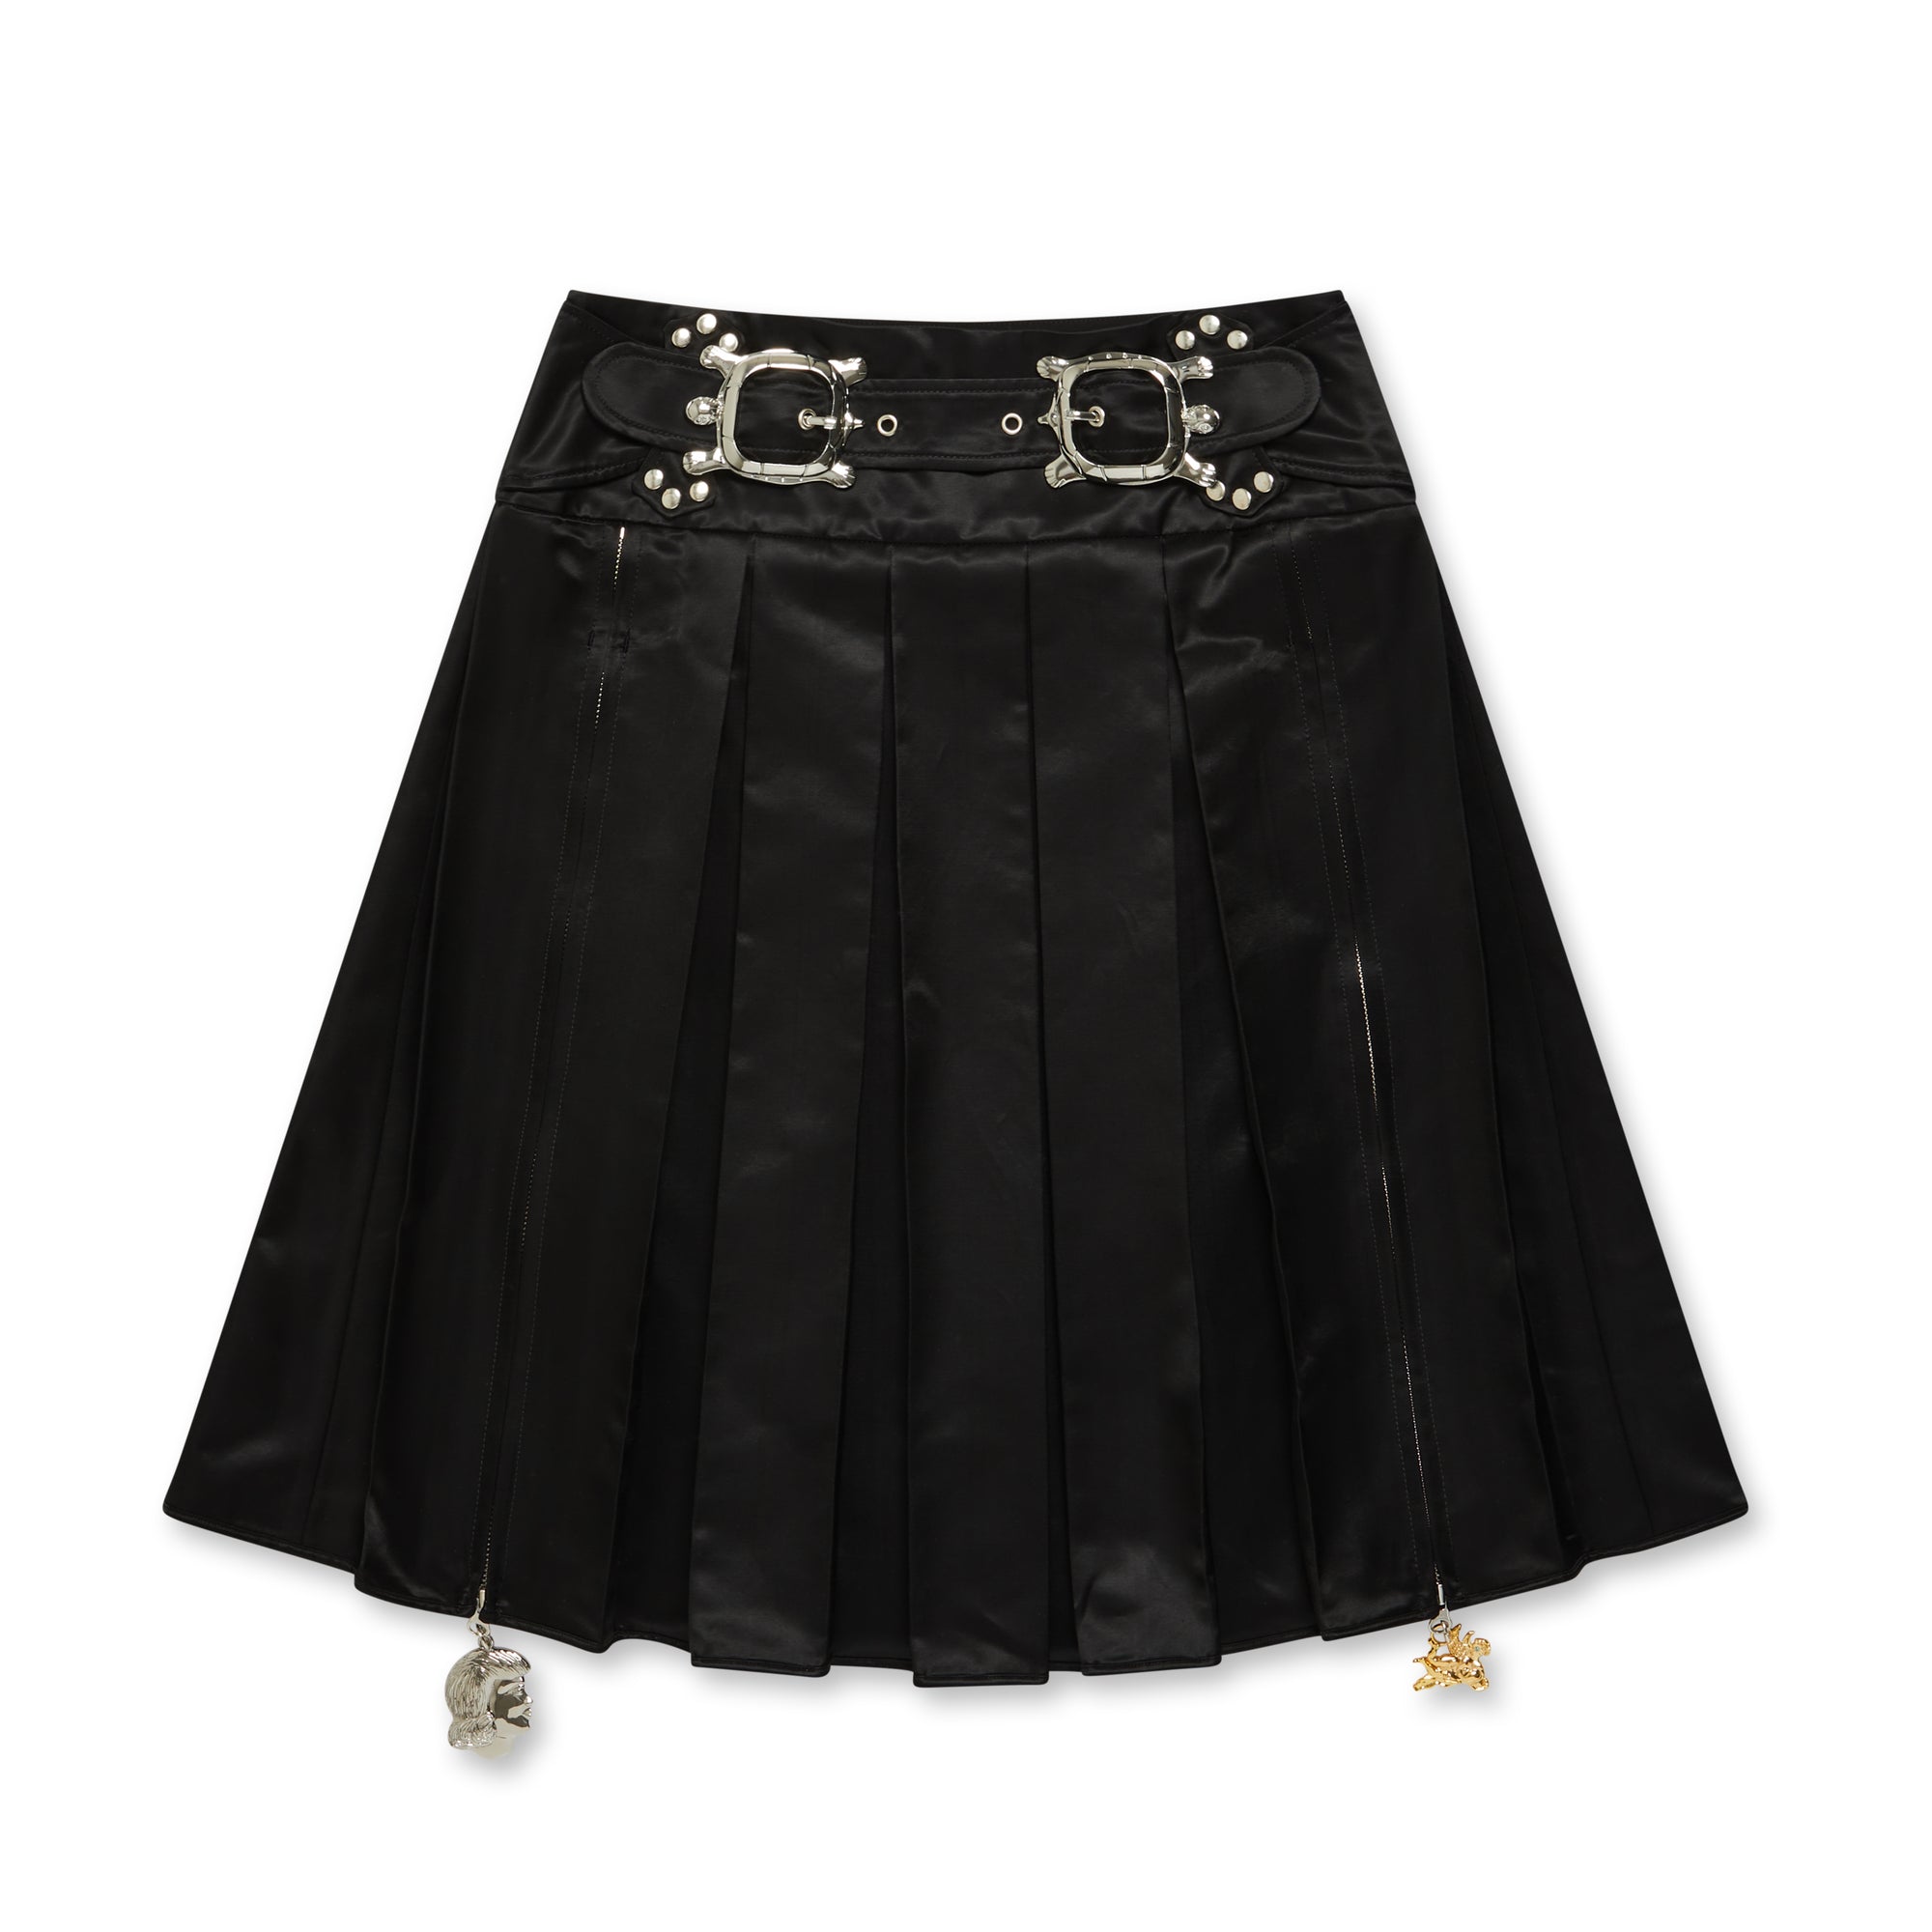 Chopova Lowena - Women’s Camber Knee Skirt - (Black) view 5